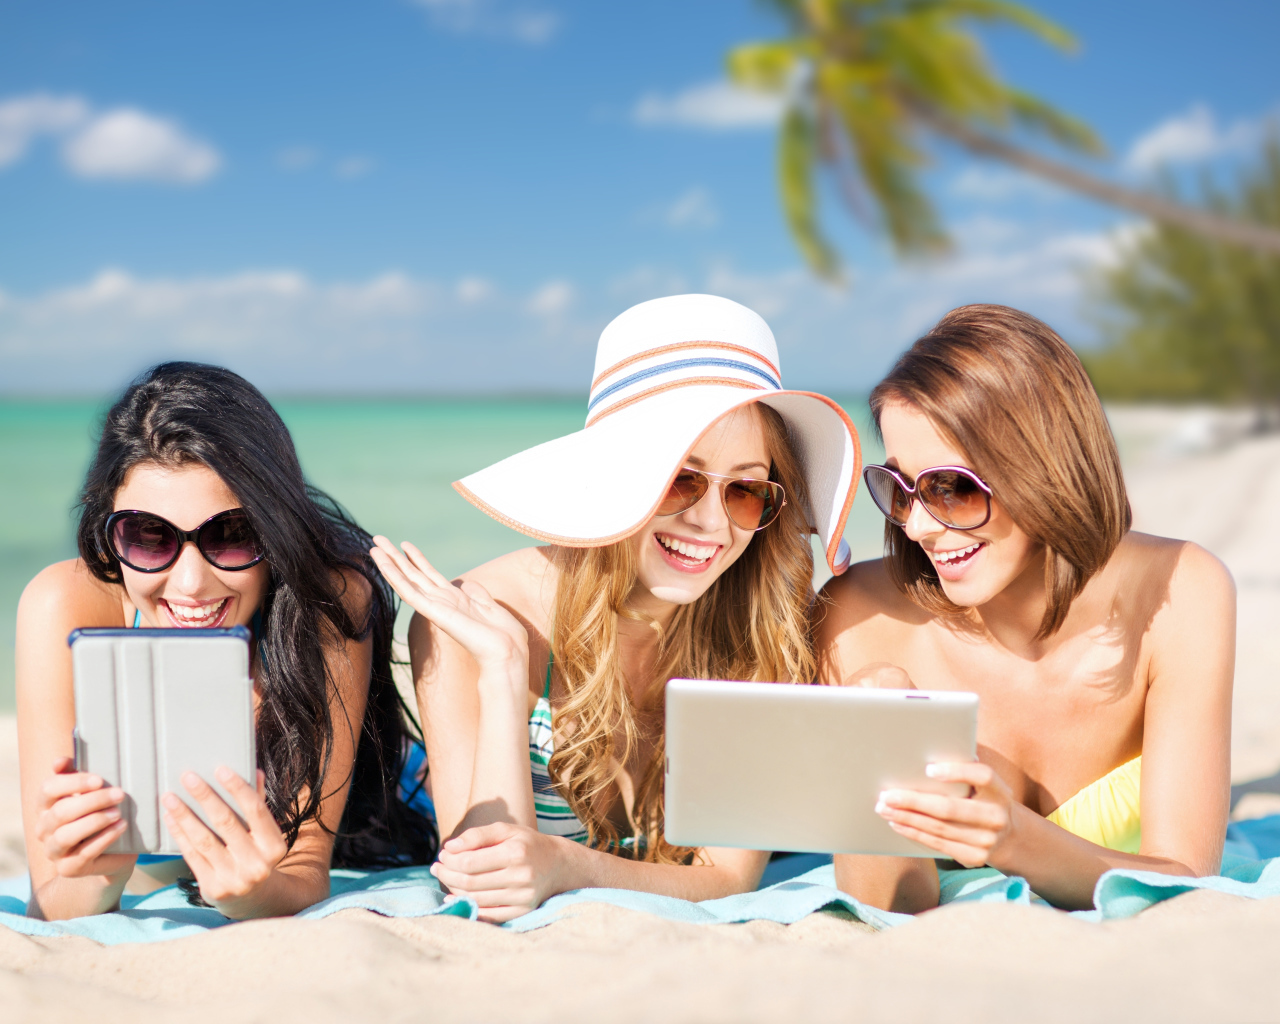 Три улыбающиеся девушки загорают на пляже с планшетами в руках